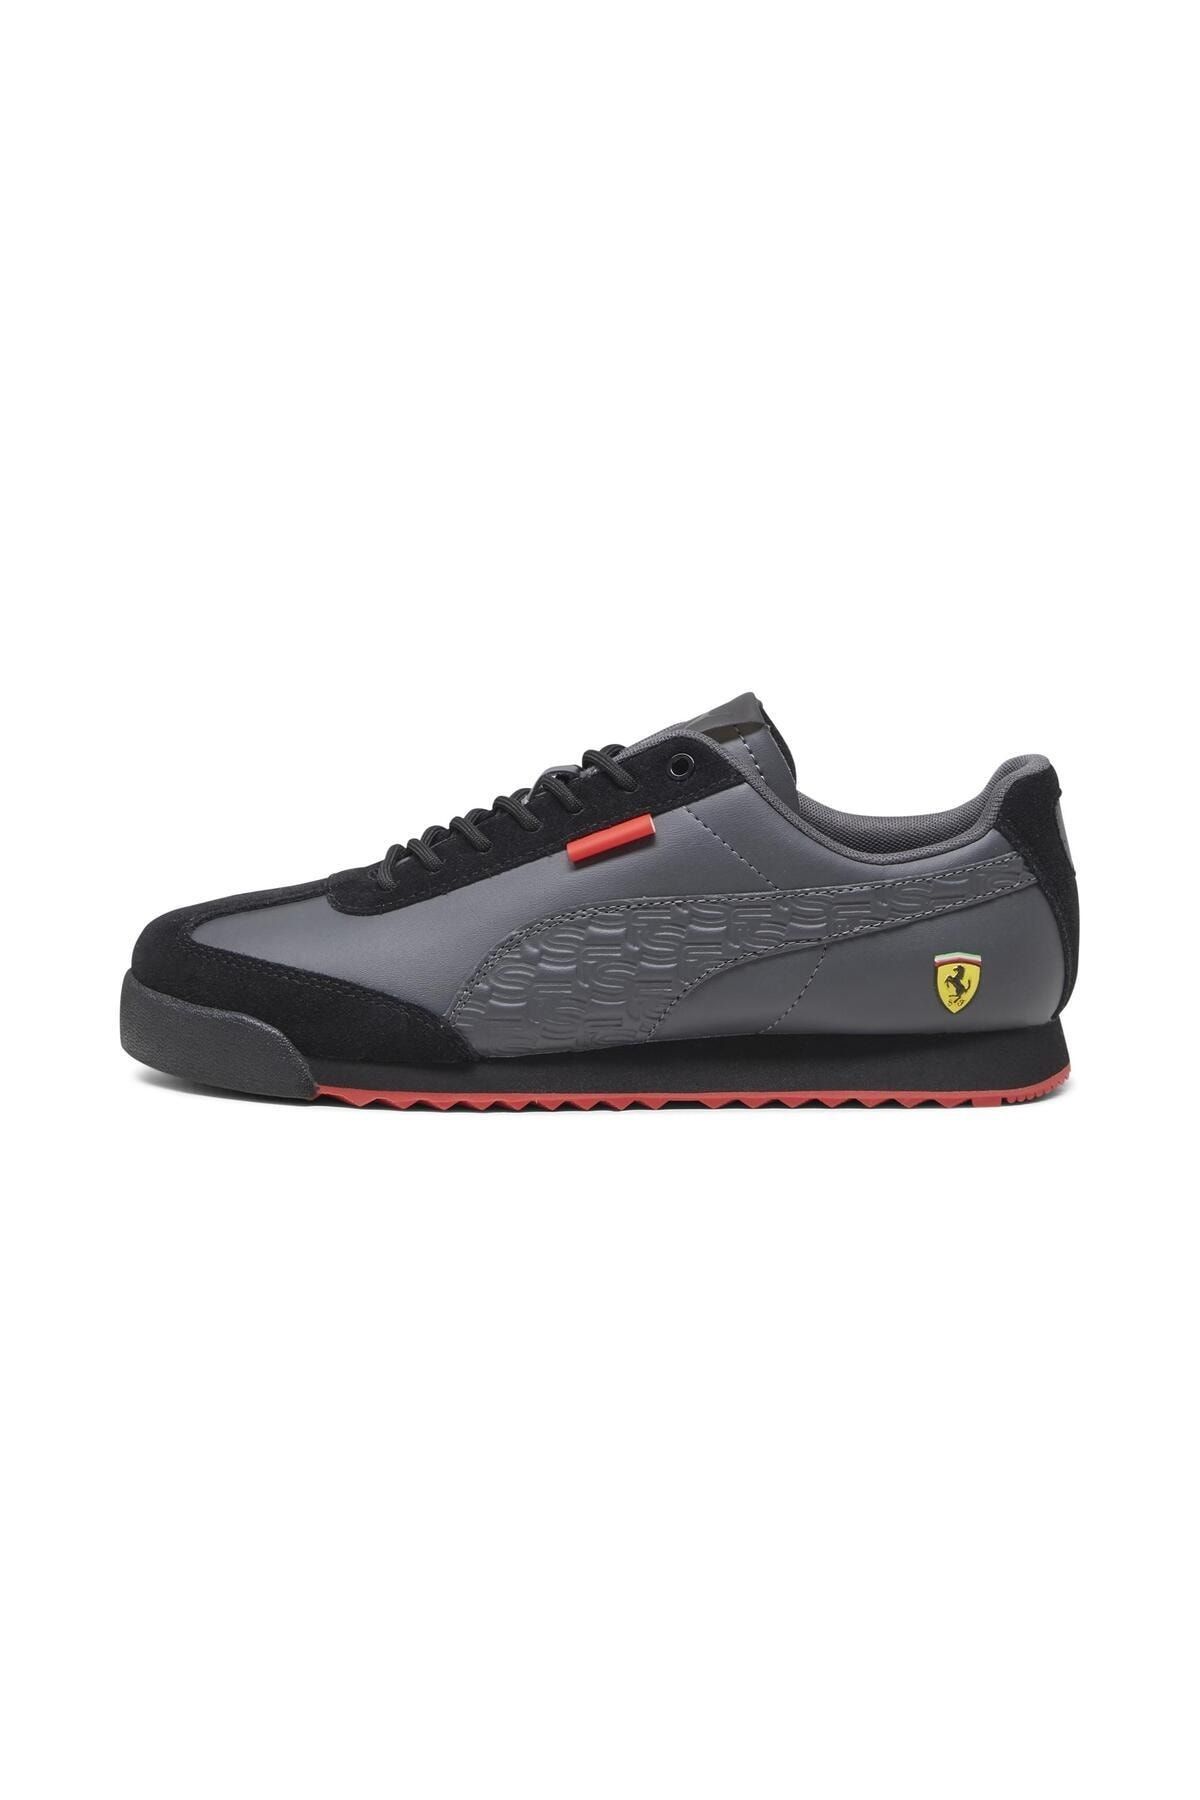 Puma Ferrari Roma Via Erkek Spor Ayakkabı Gri-Siyah 30781301